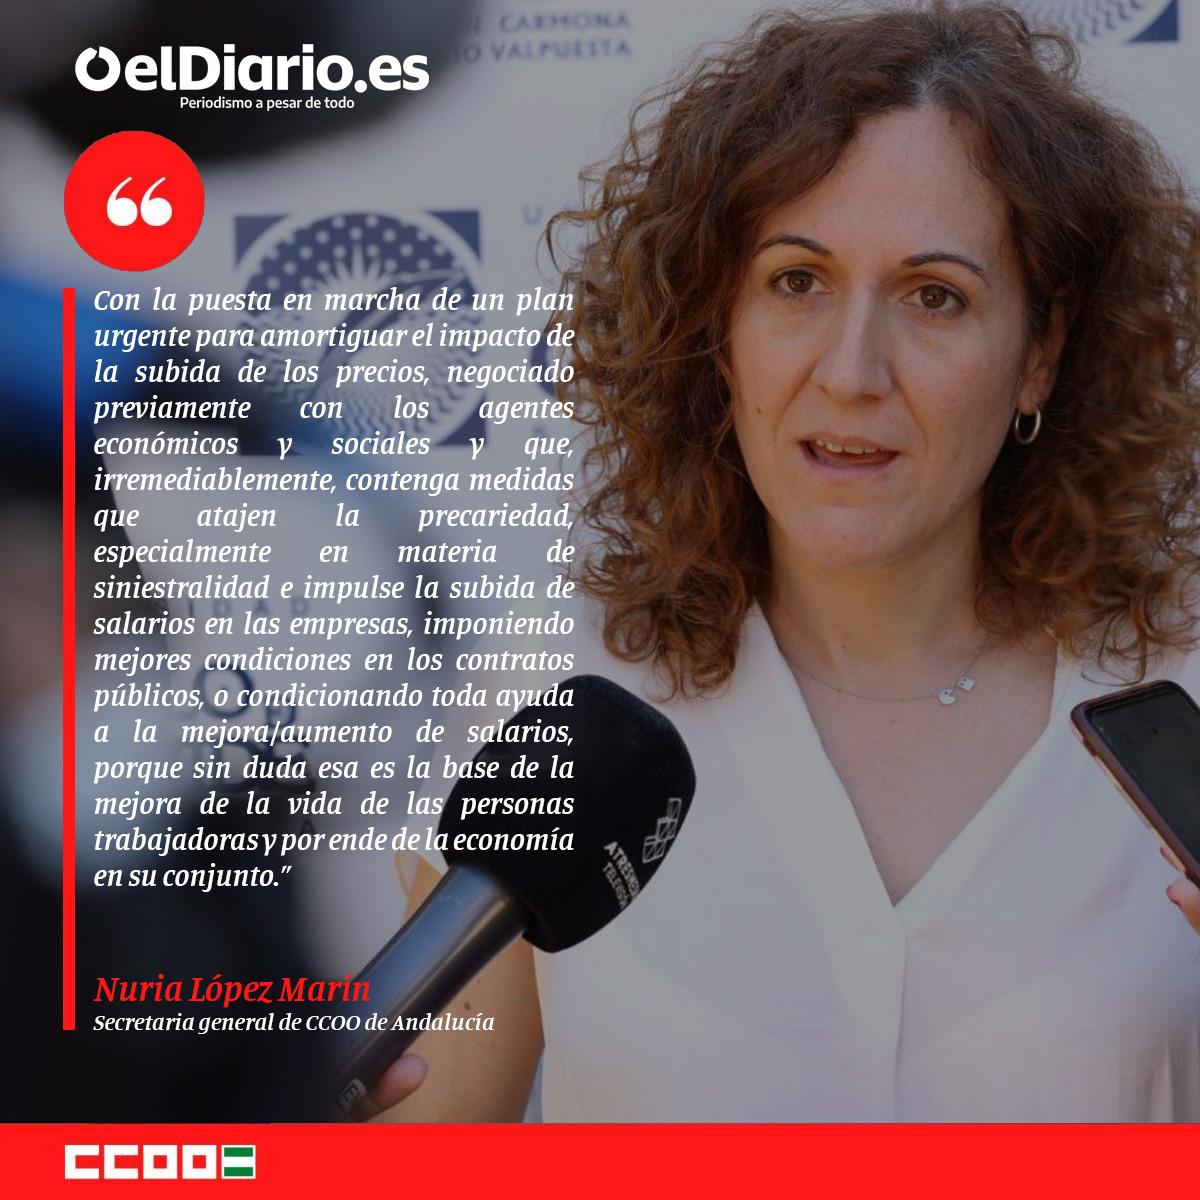 Nuria López Marín - Secretaria general de CCOO de Andalucía